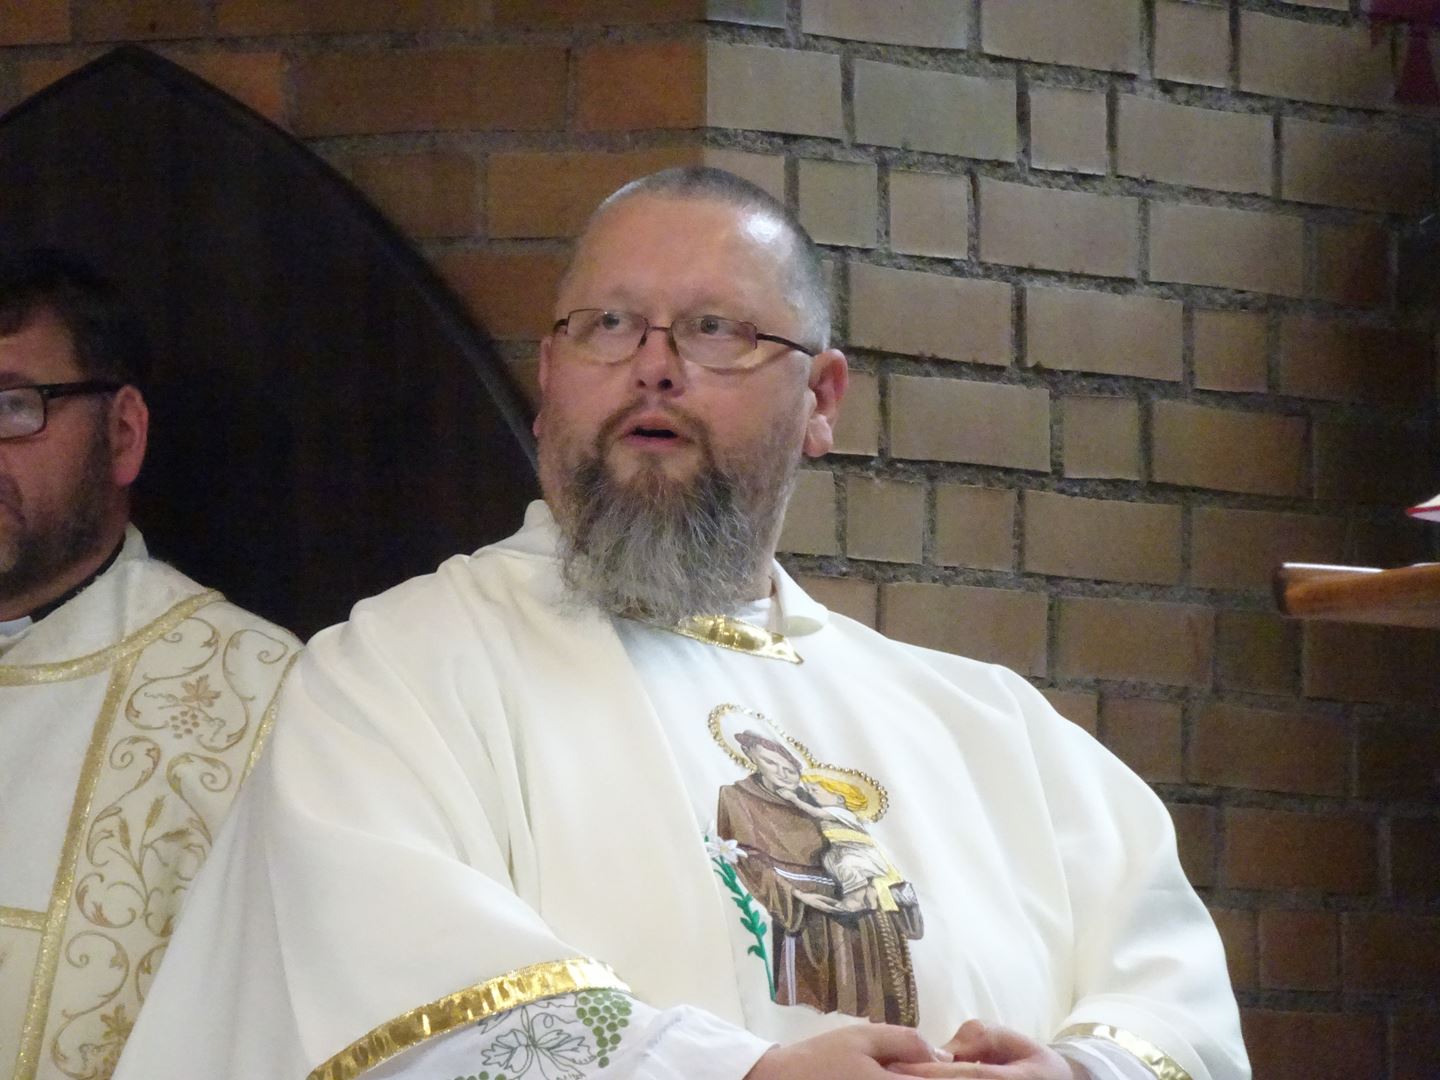 Pater Wladek Mezyks 25-årsjubileum som präst. Jönköping 13 juni 2020